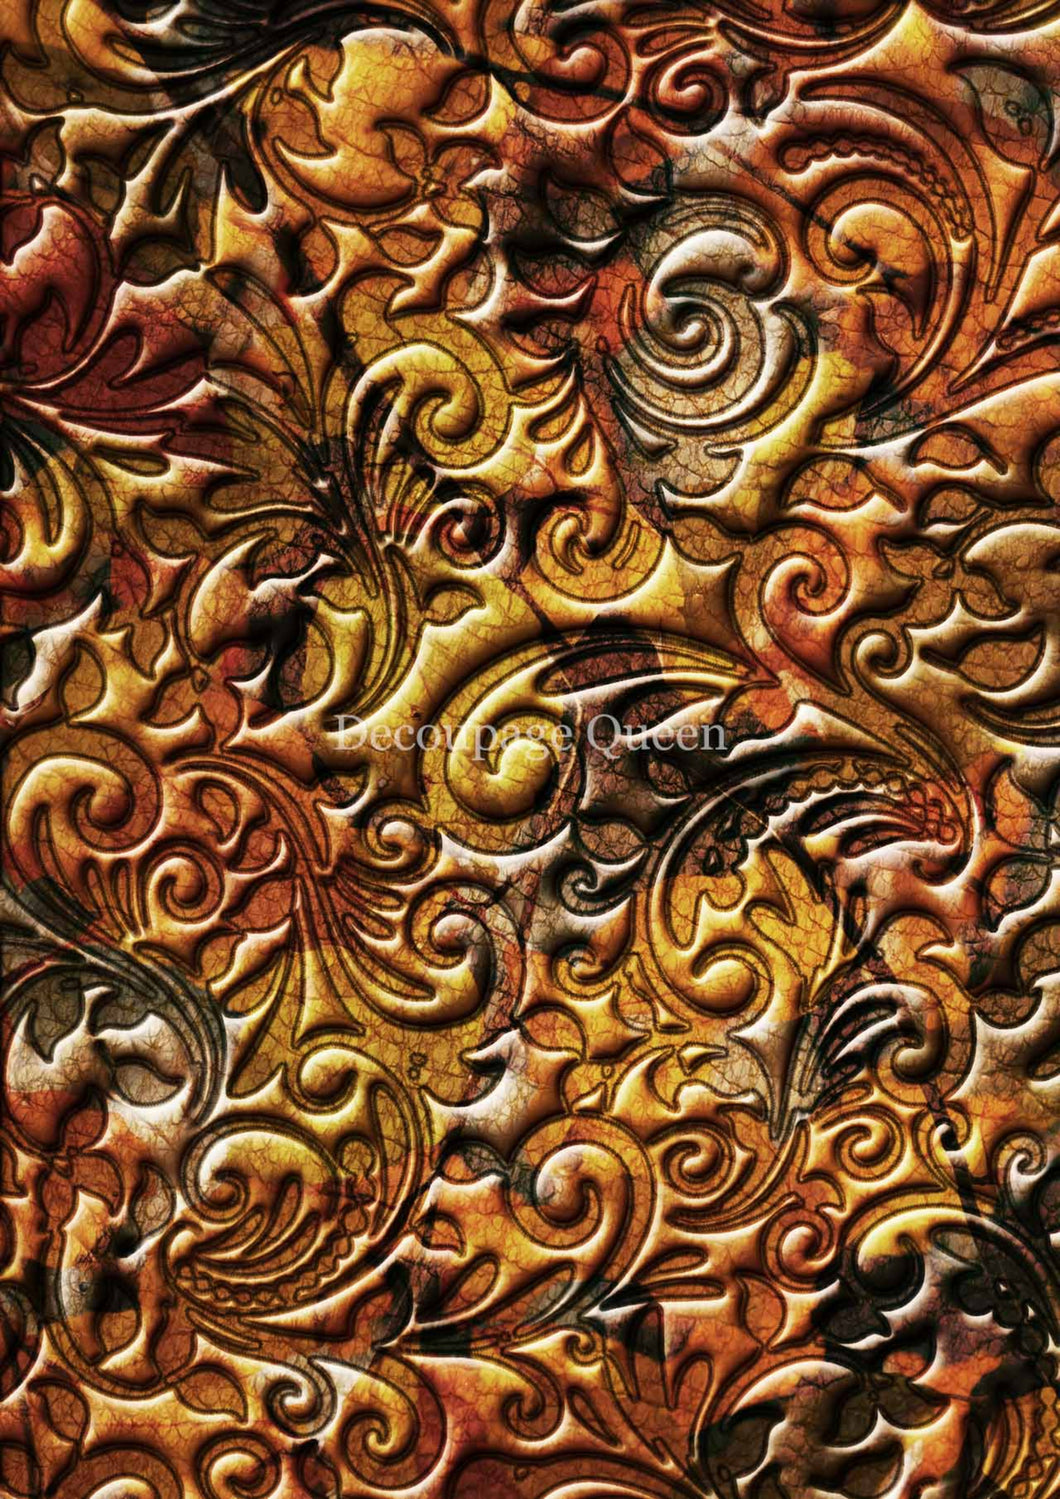 Autumn Swirls Rice Paper by Decoupage Queen